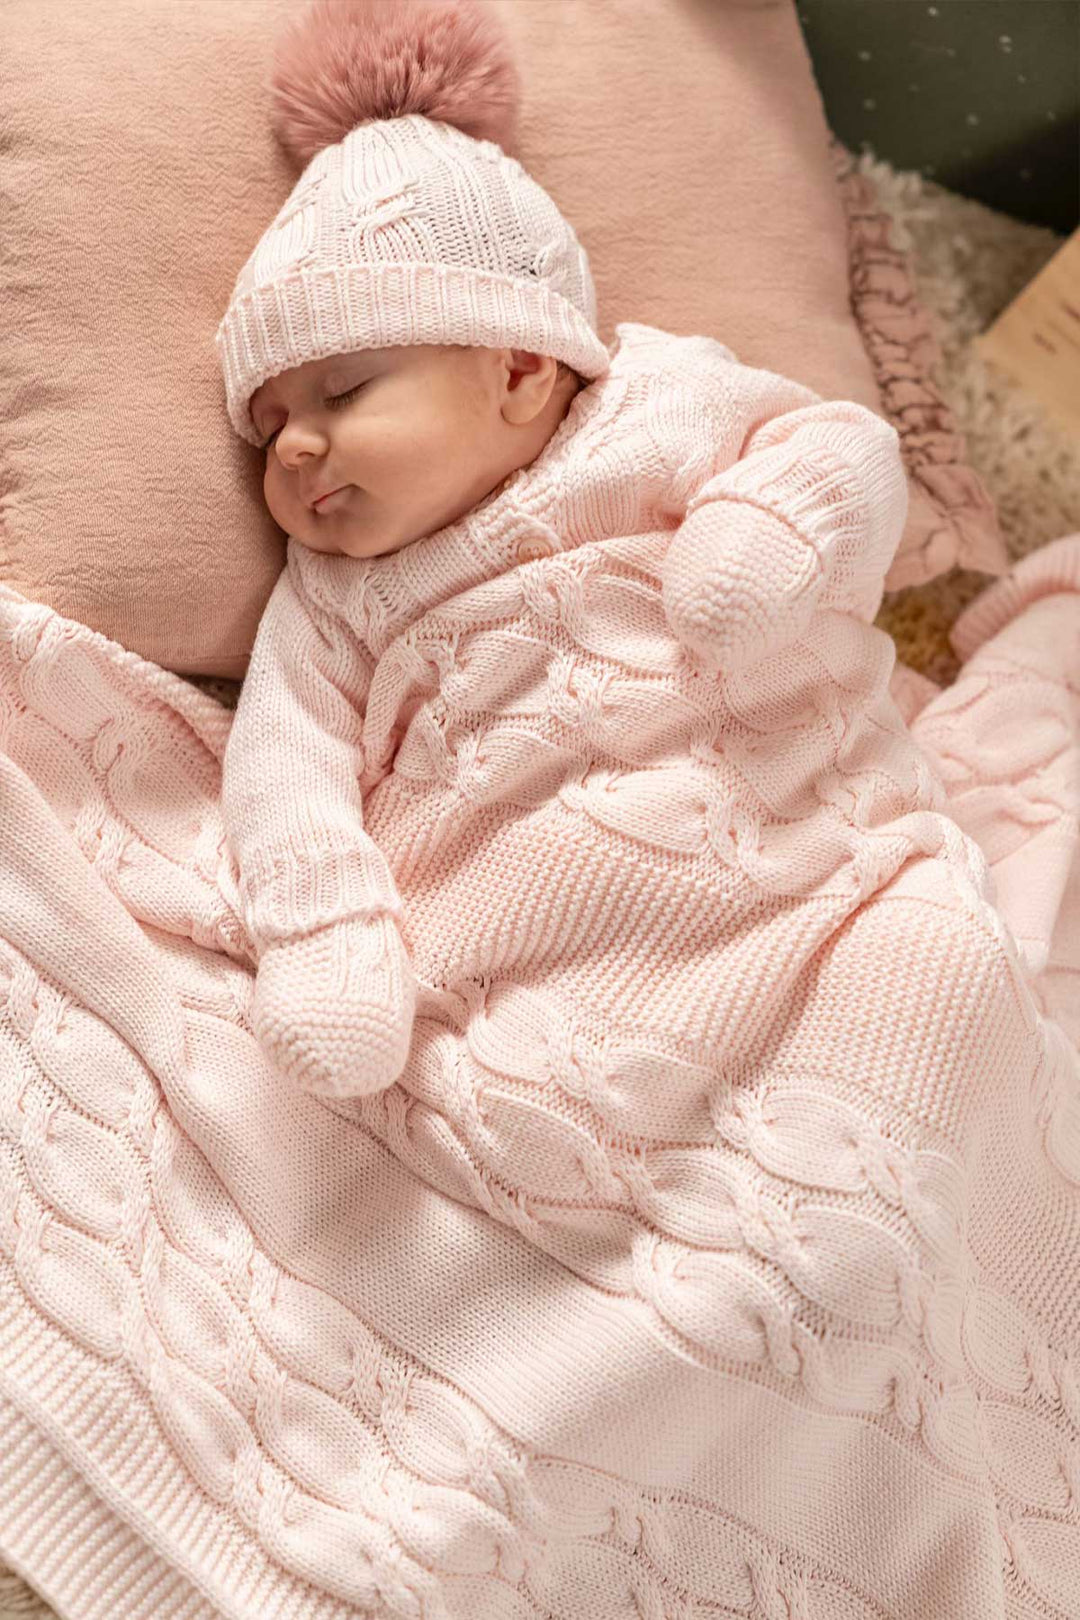 pink knitwear set for newborn baby girl